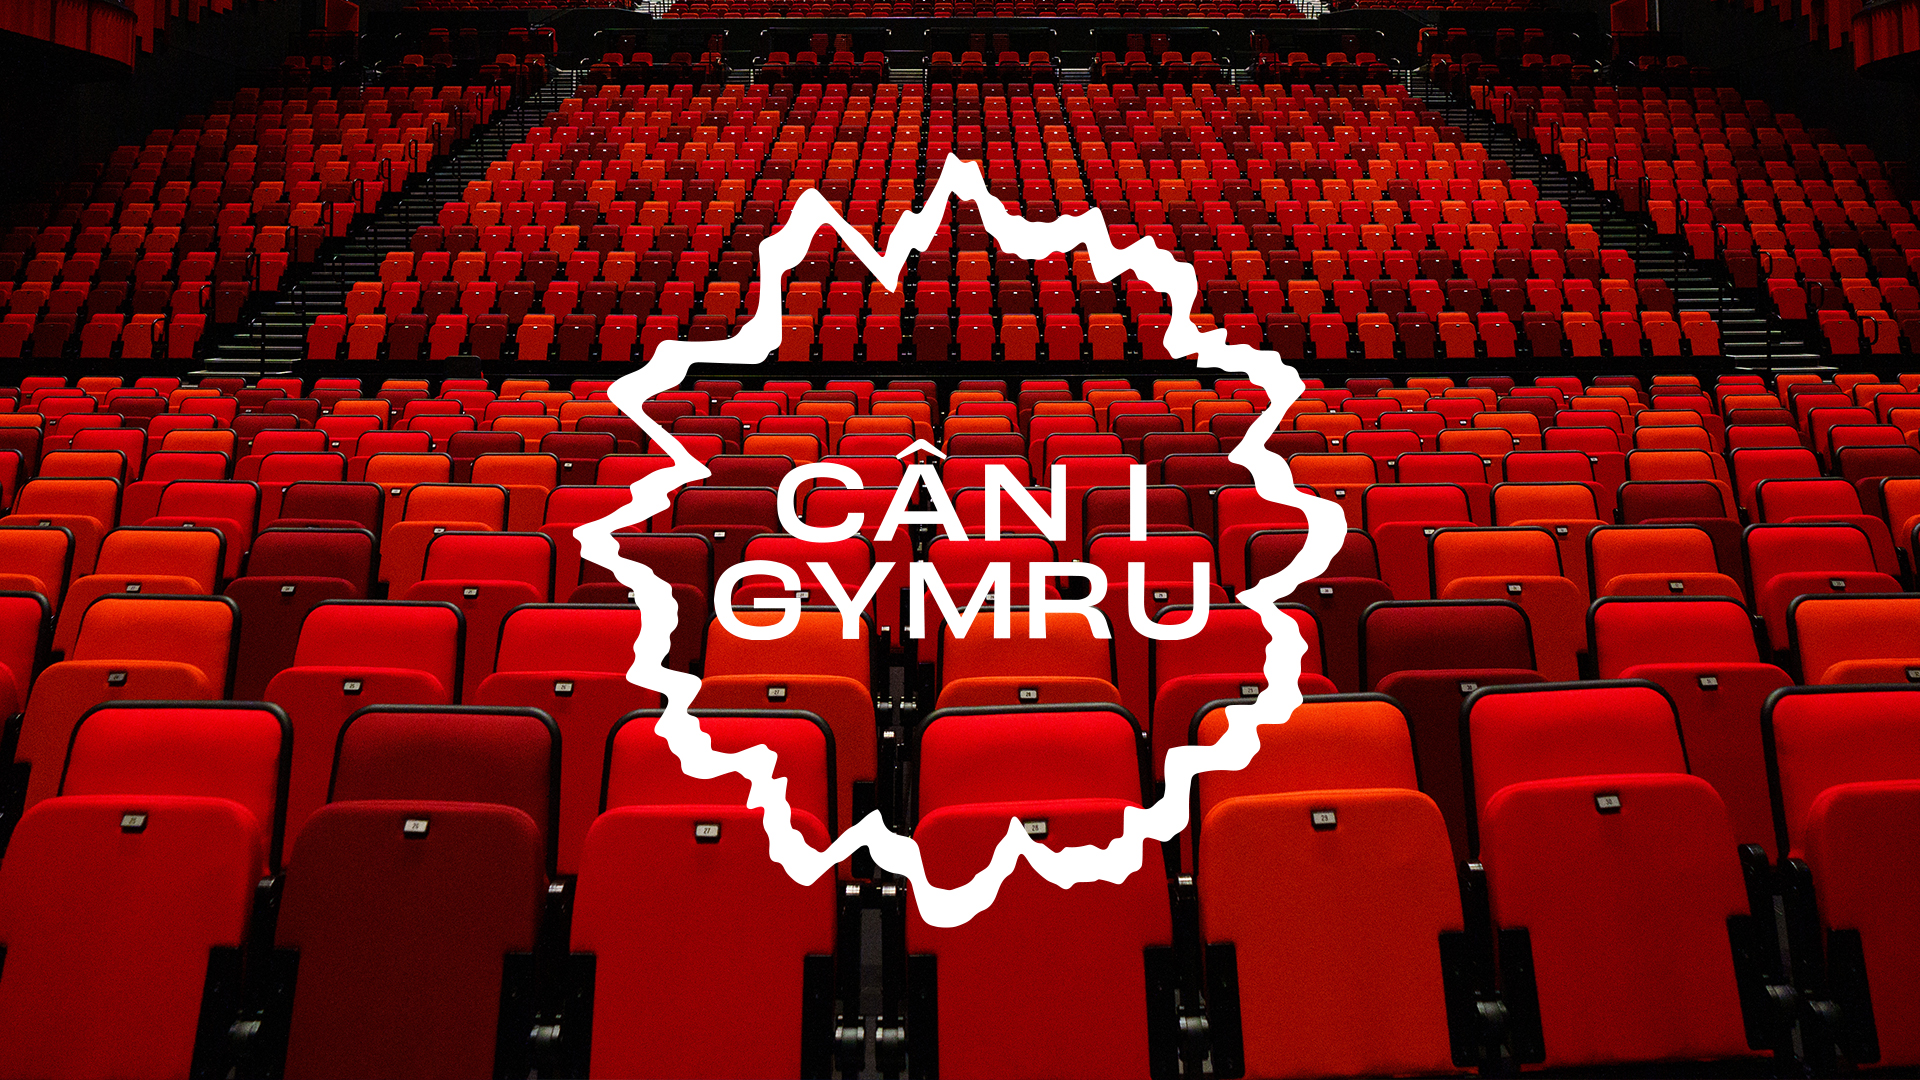 Reimbursement for the cost of voting for Cân i Gymru